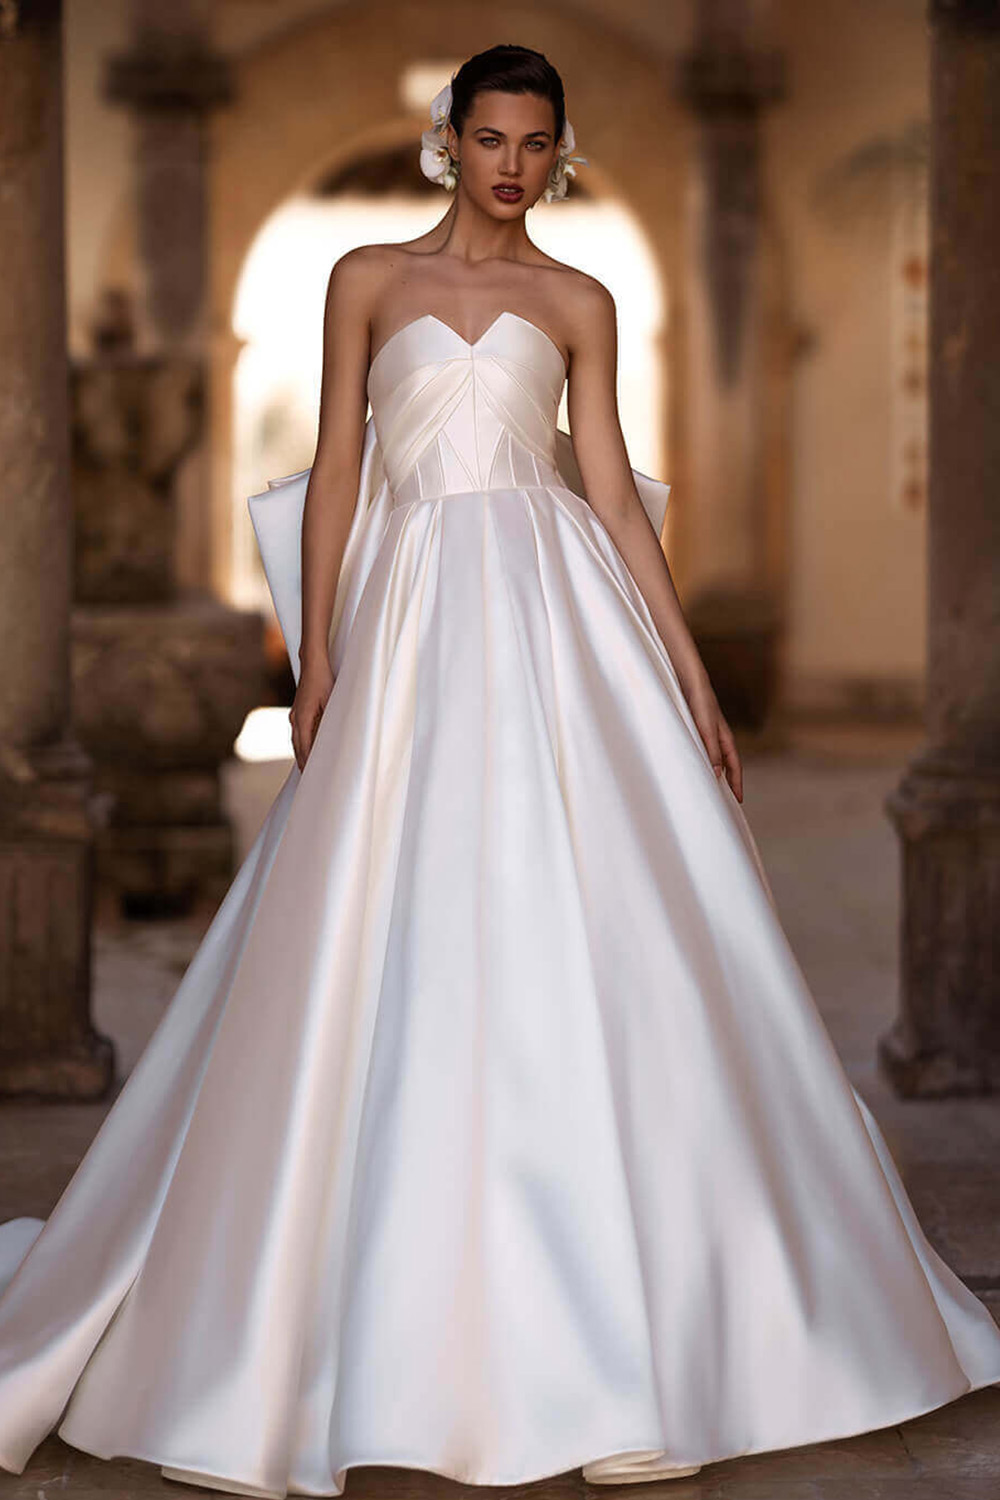 Glossy wedding dress